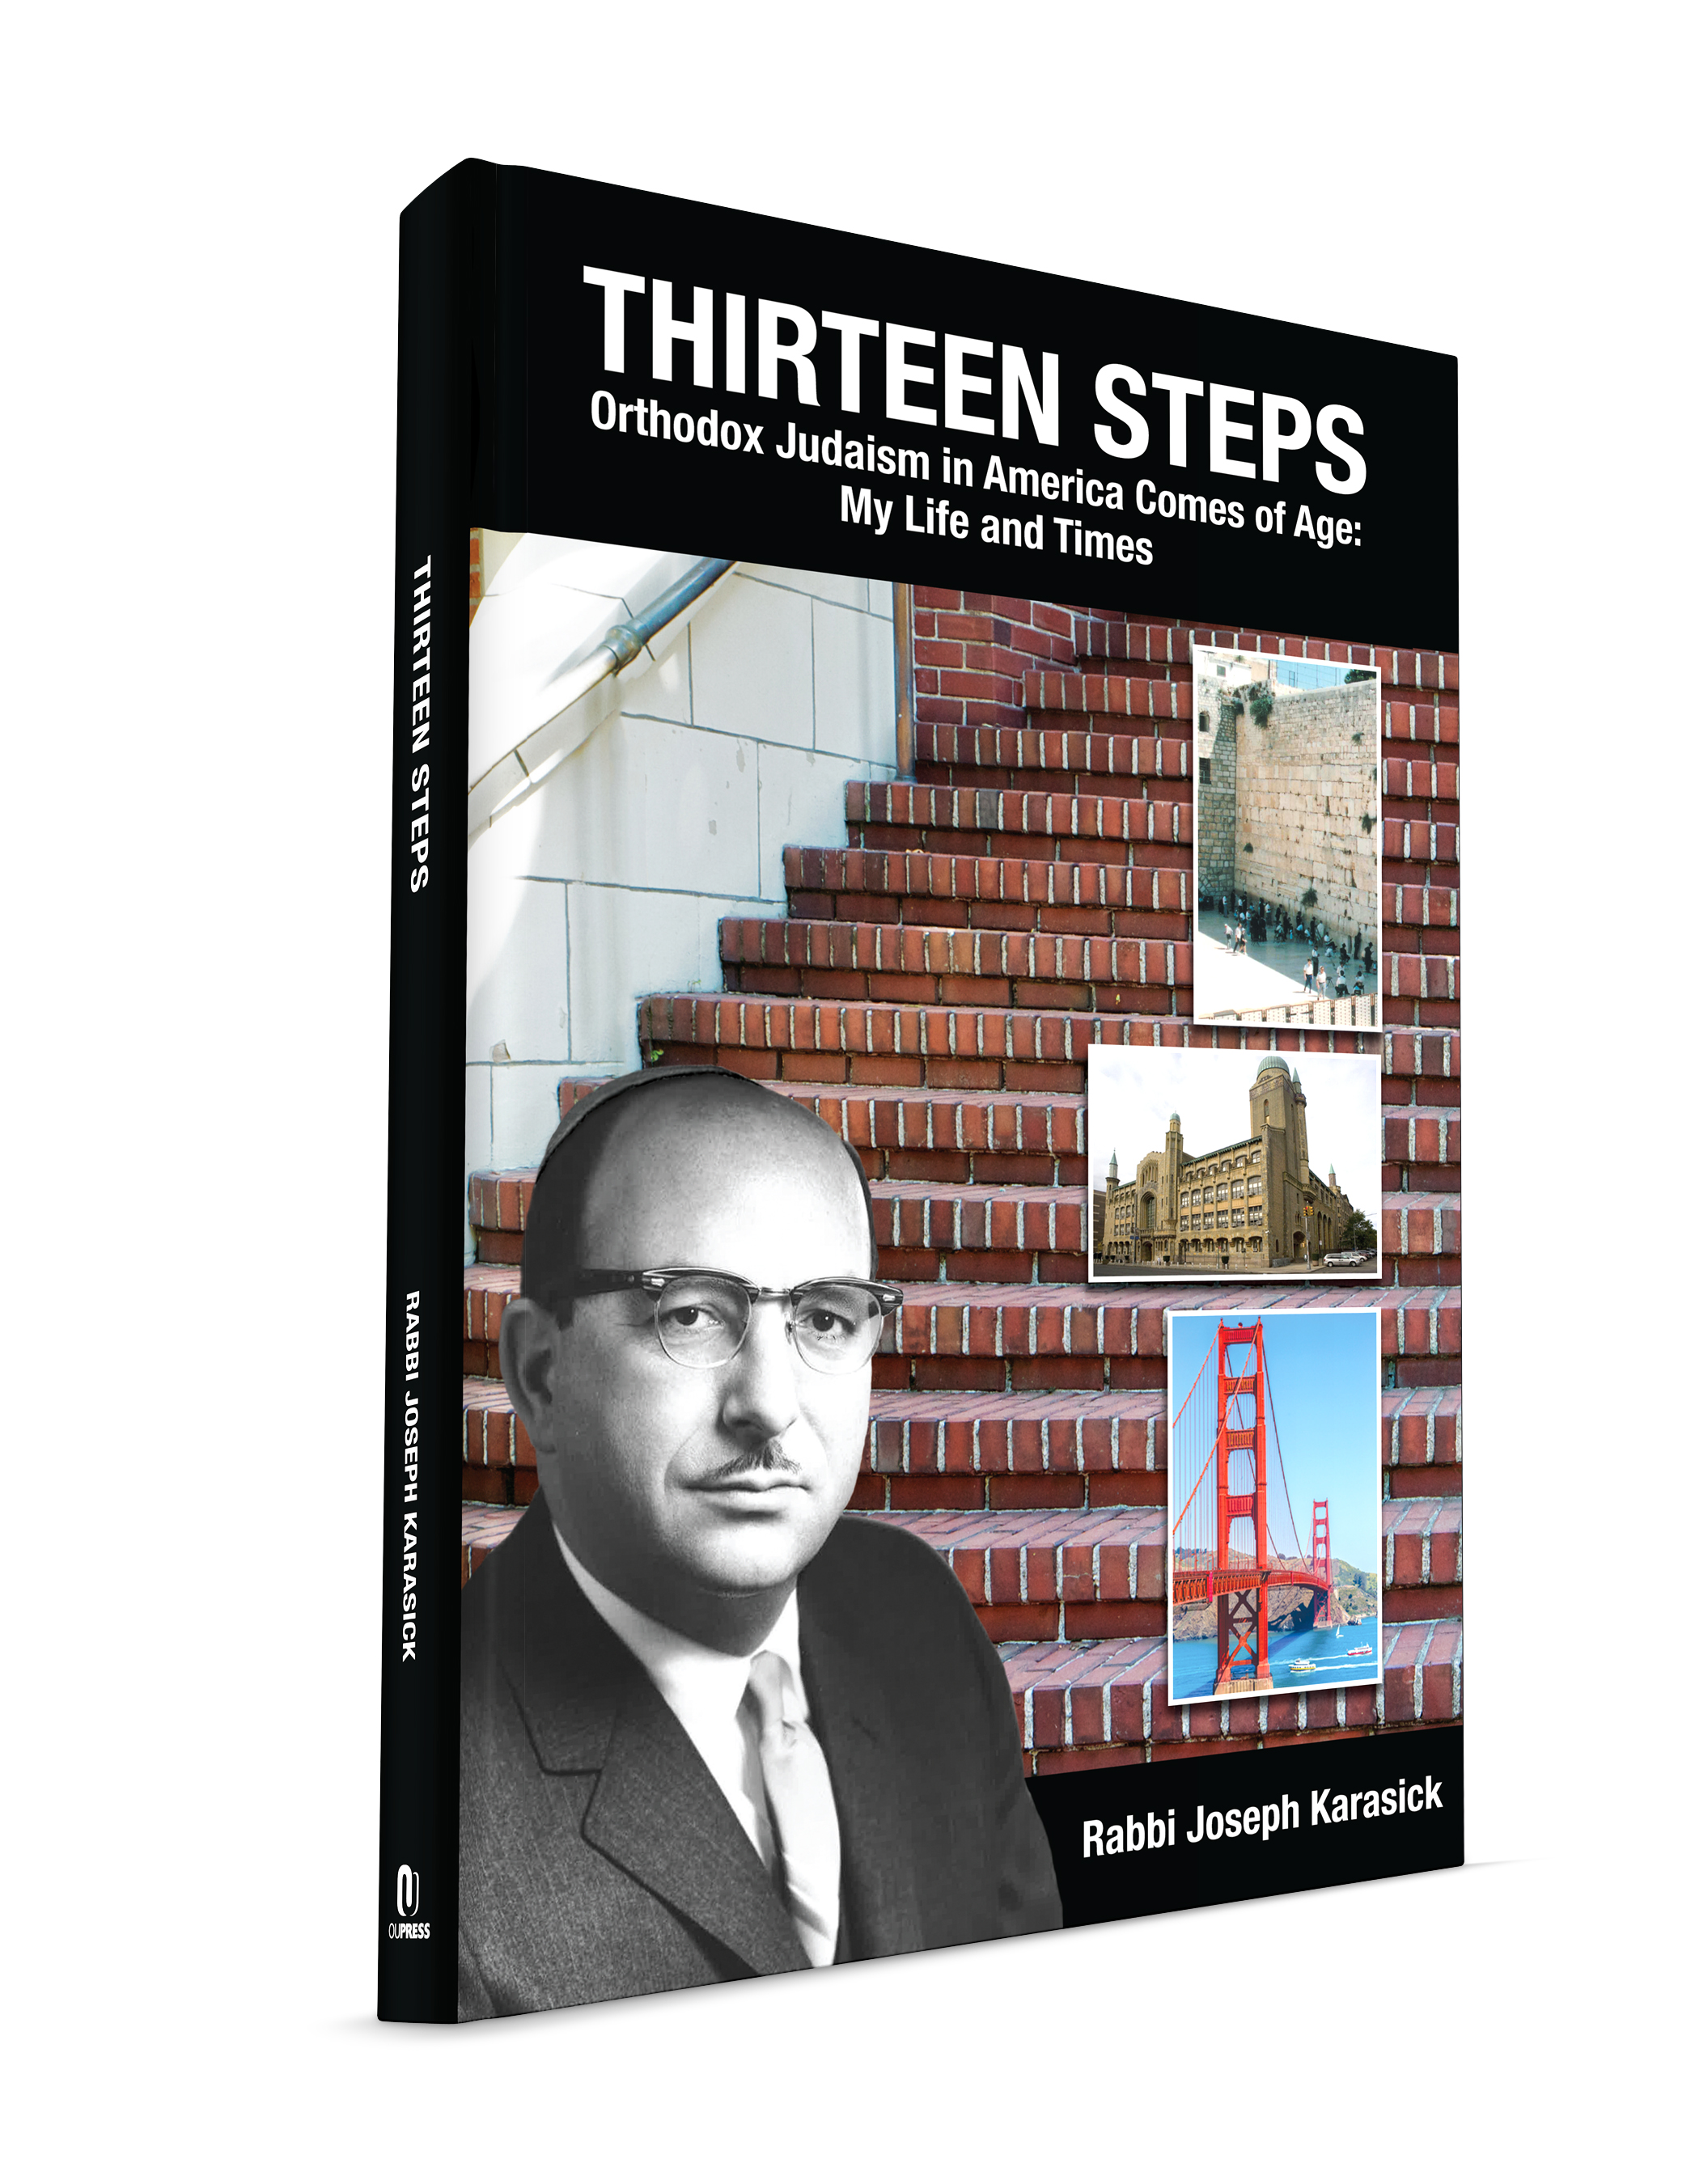 13 steps